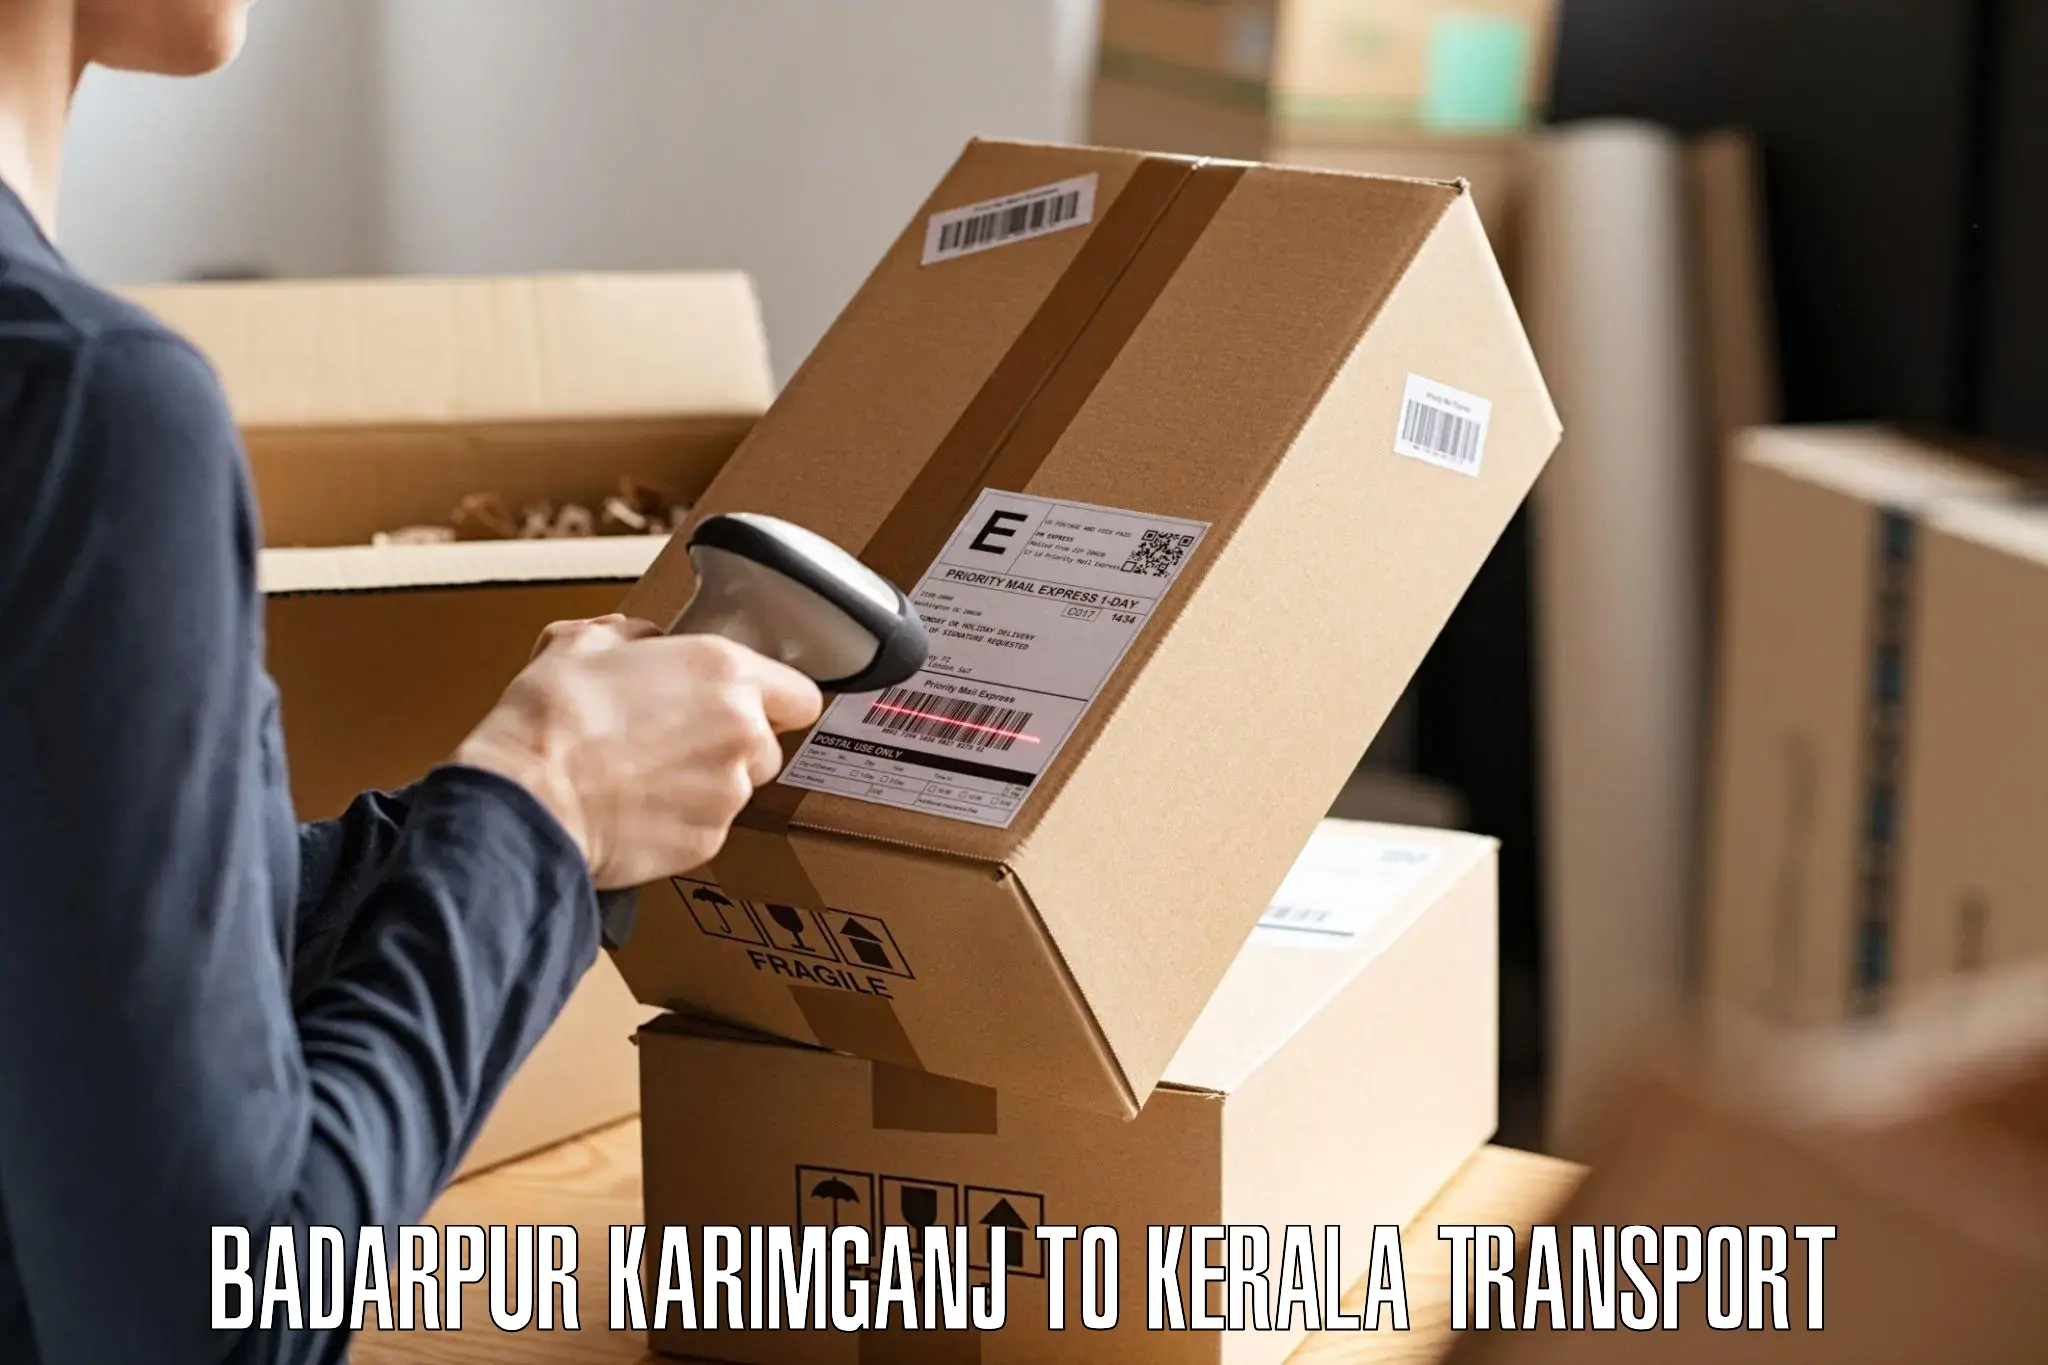 Pick up transport service Badarpur Karimganj to Cochin Port Kochi